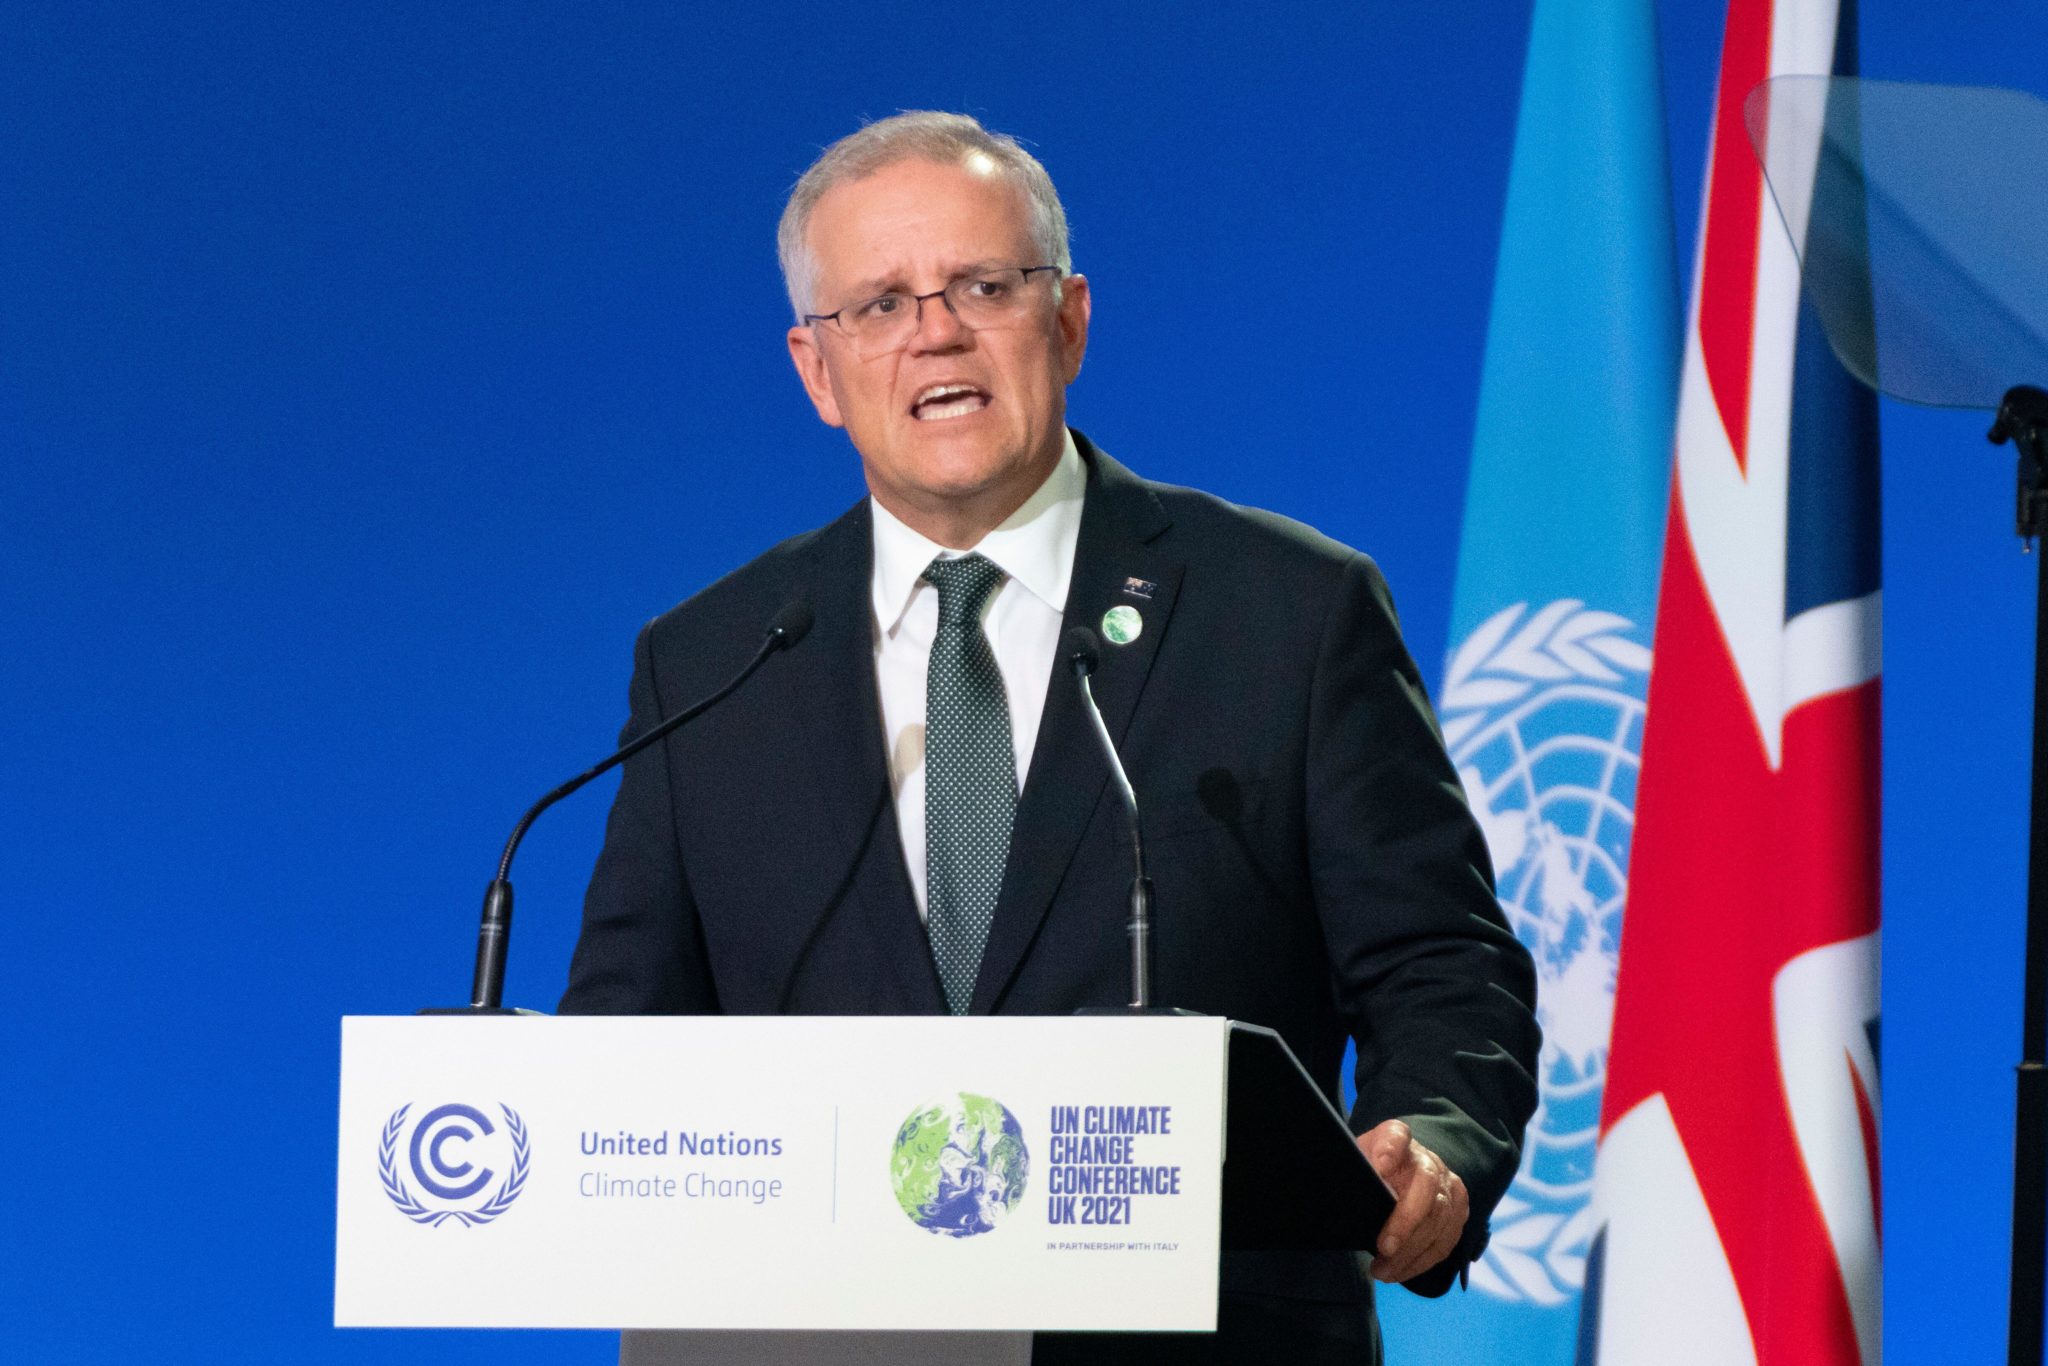 The Australian Prime Minister Scott Morrison speaking at the COP26 UN Climate Summit. Image: Iain Masterton/Alamy Live News